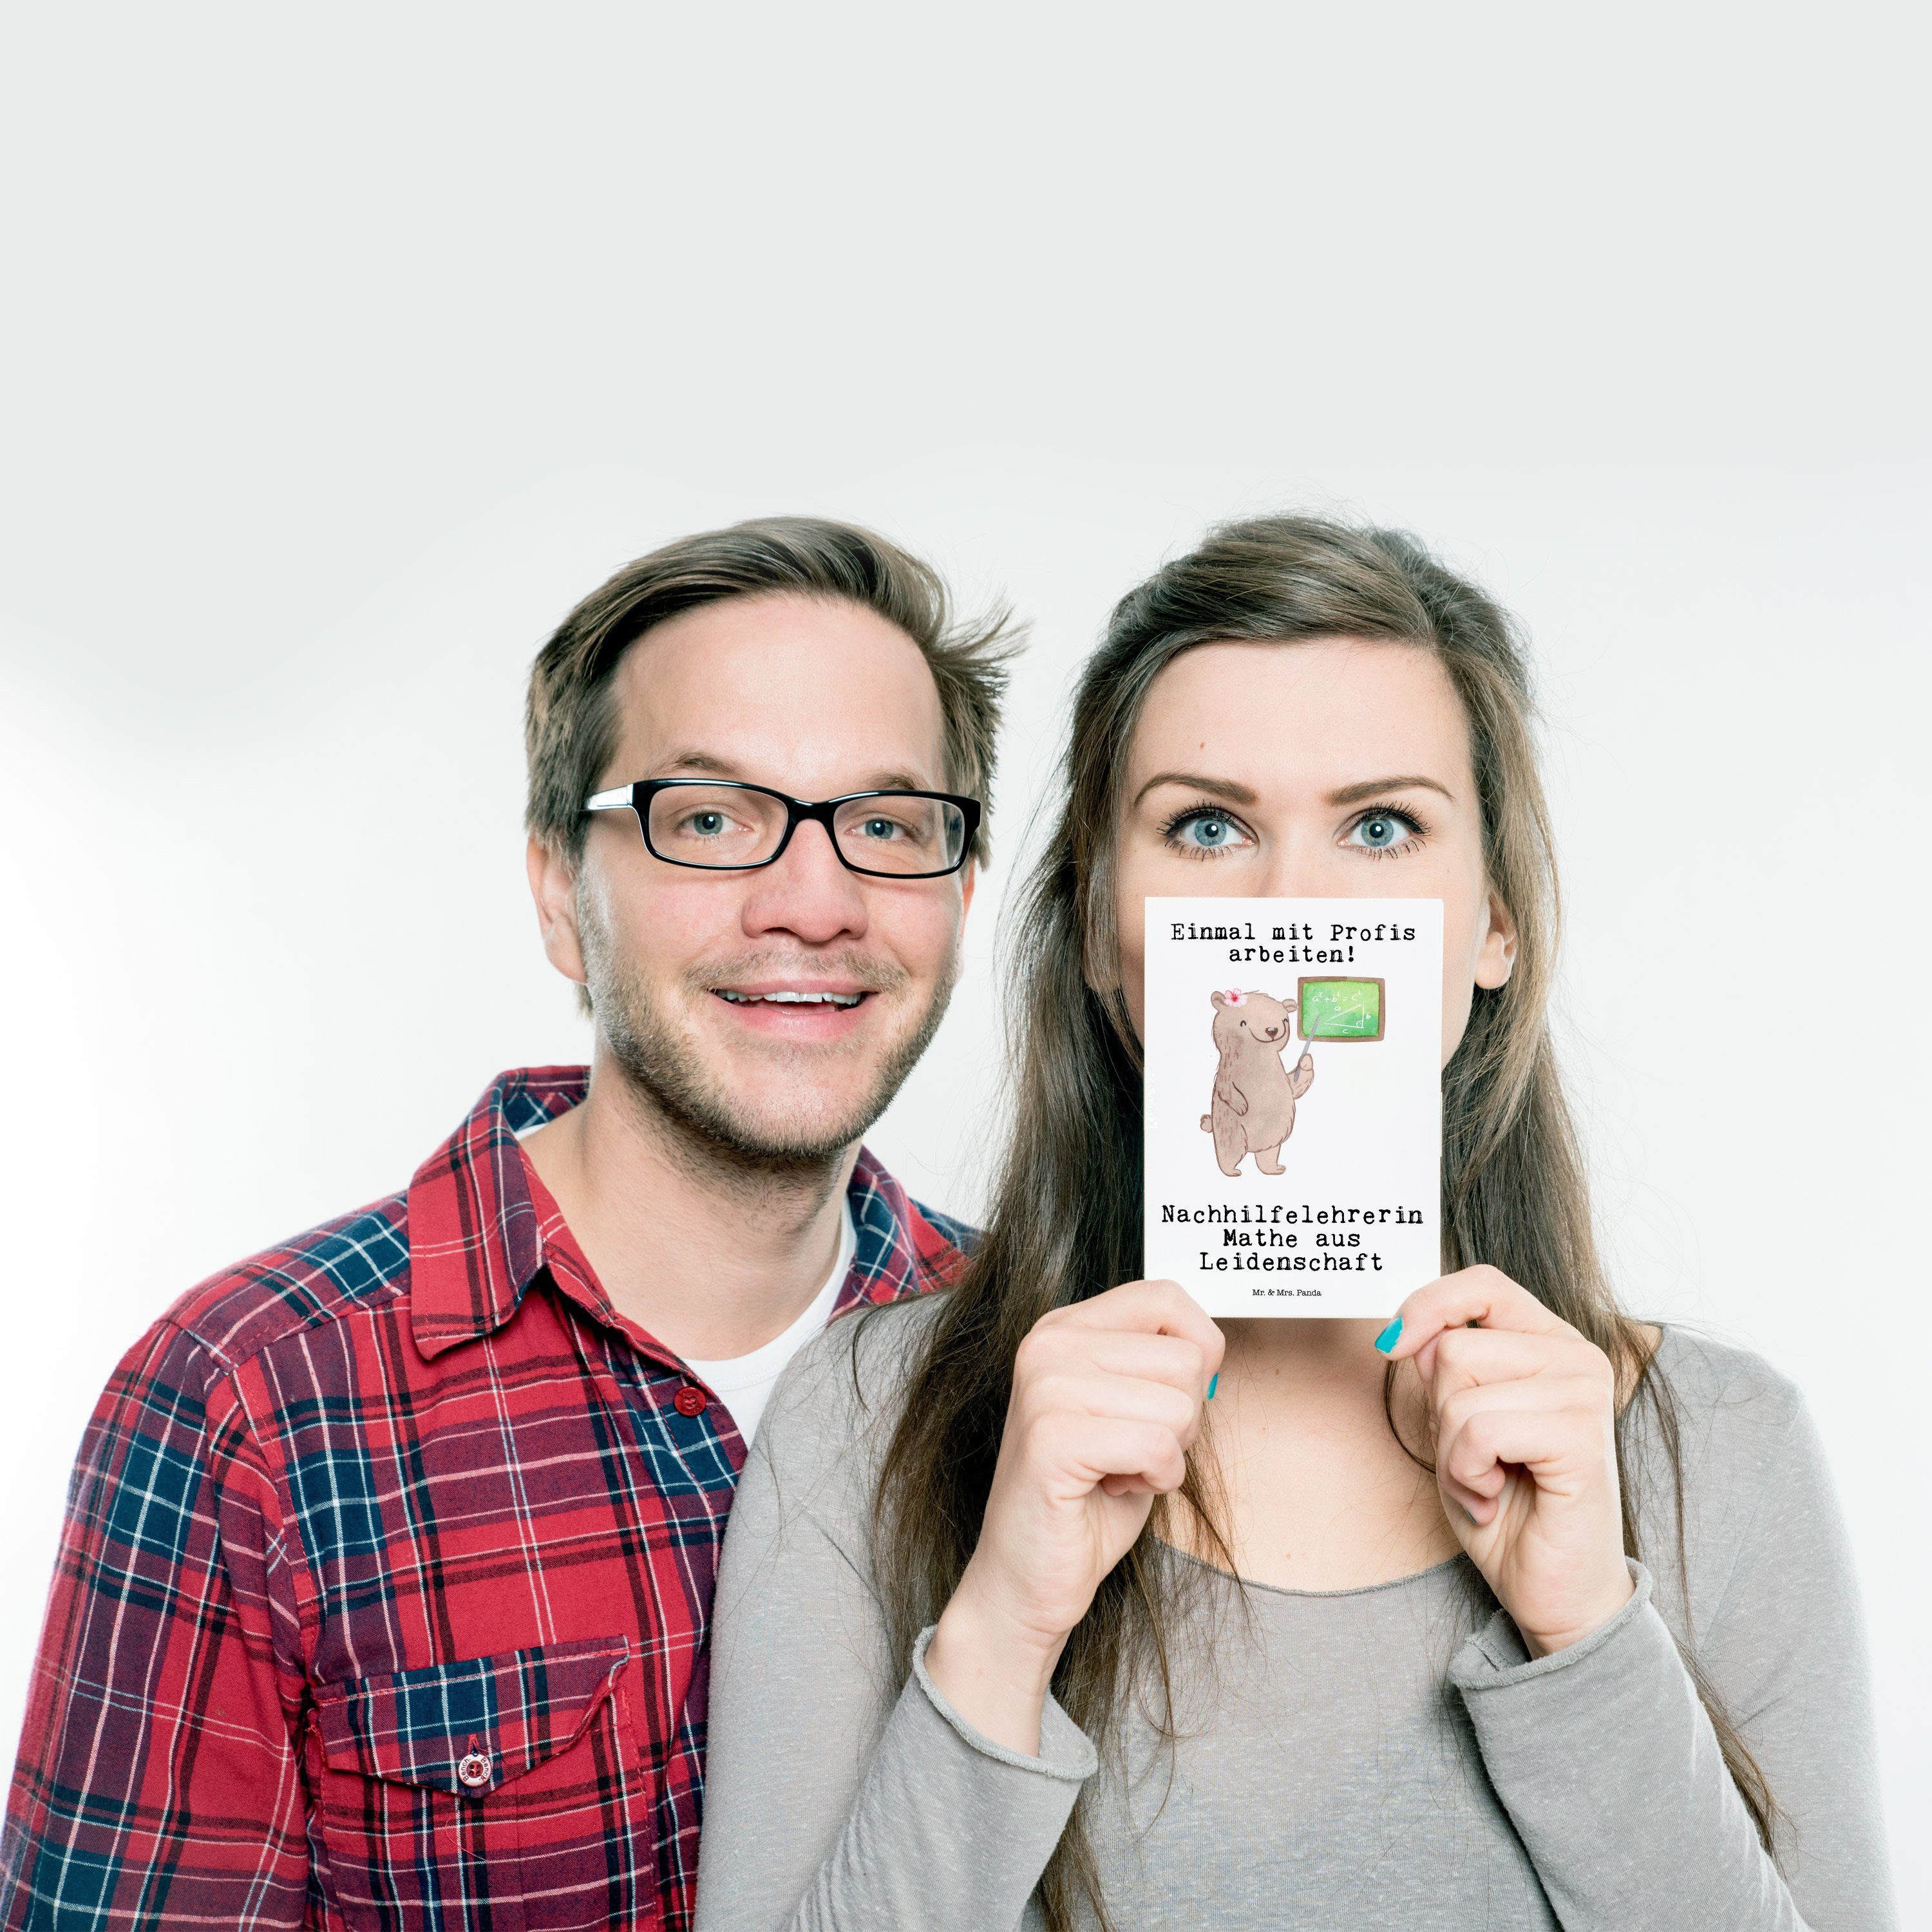 Mr. & Mrs. - Nachhilfelehrerin Mathe Leidenschaft Weiß - aus Geschenk, Postkarte Nachhilfe Panda